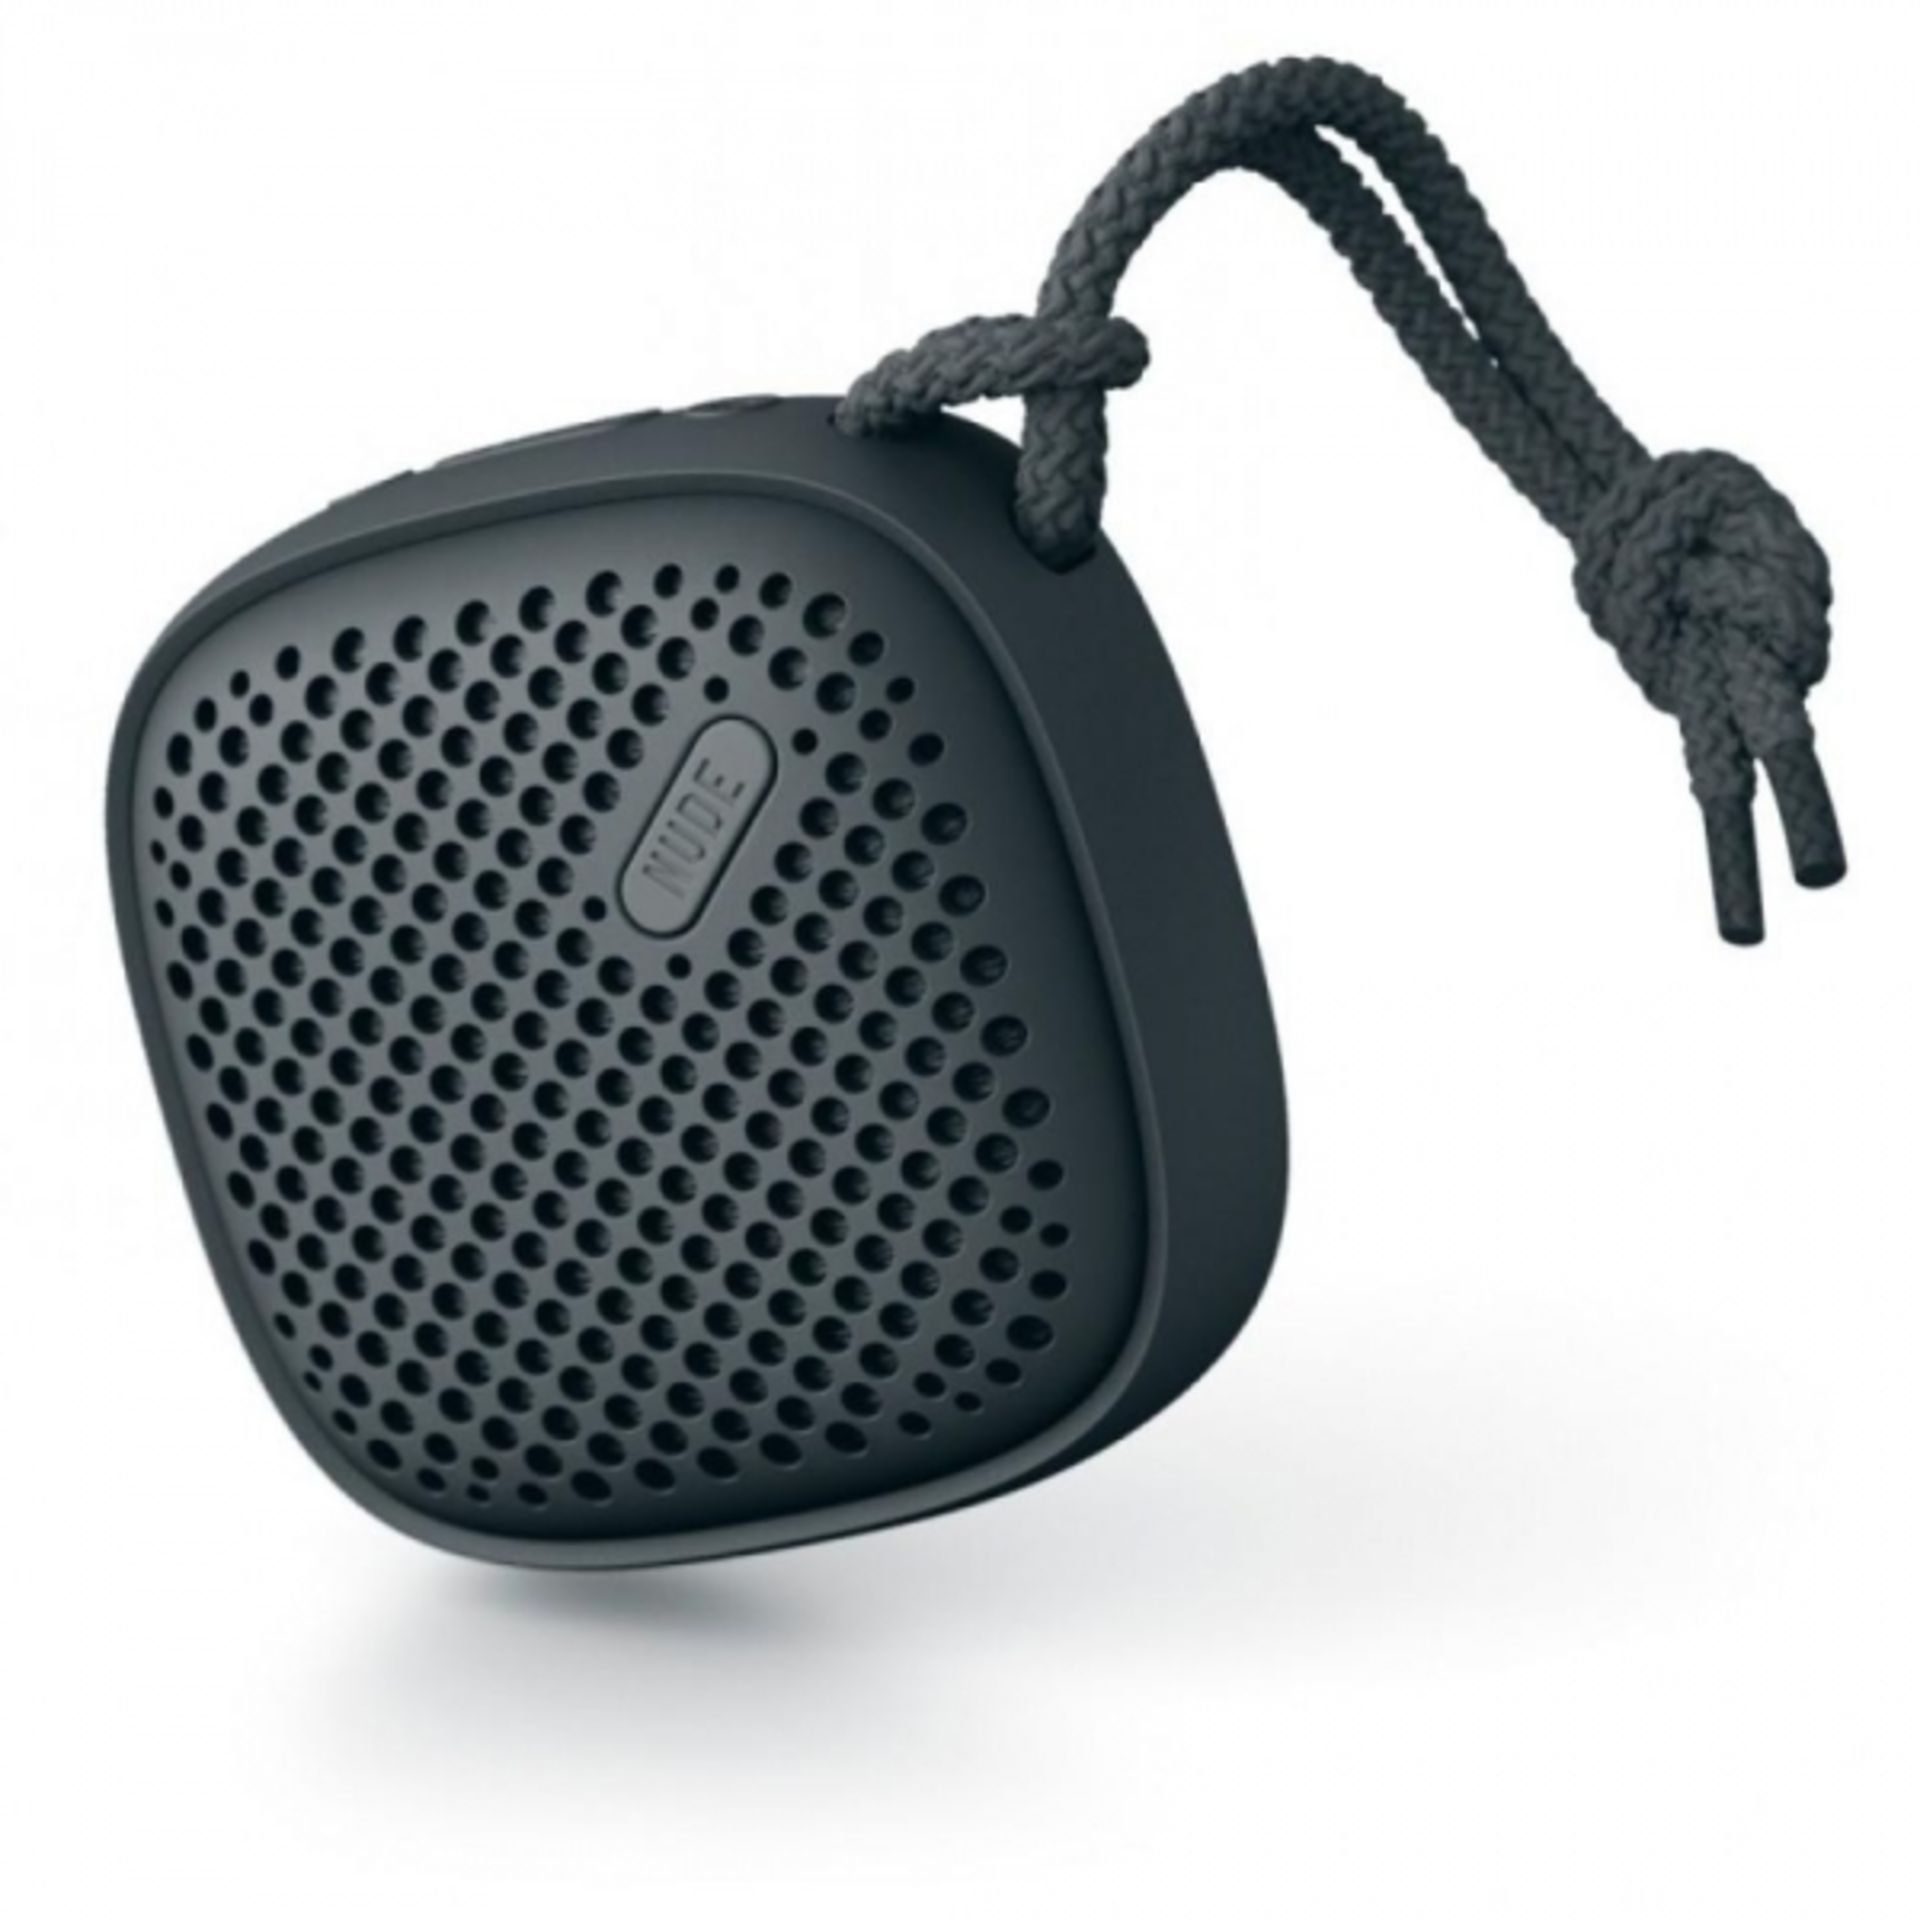 V Brand New NudeAudio Move S Universal Portable Wireless Speaker ISP £29.99 X 2 Bid price to be